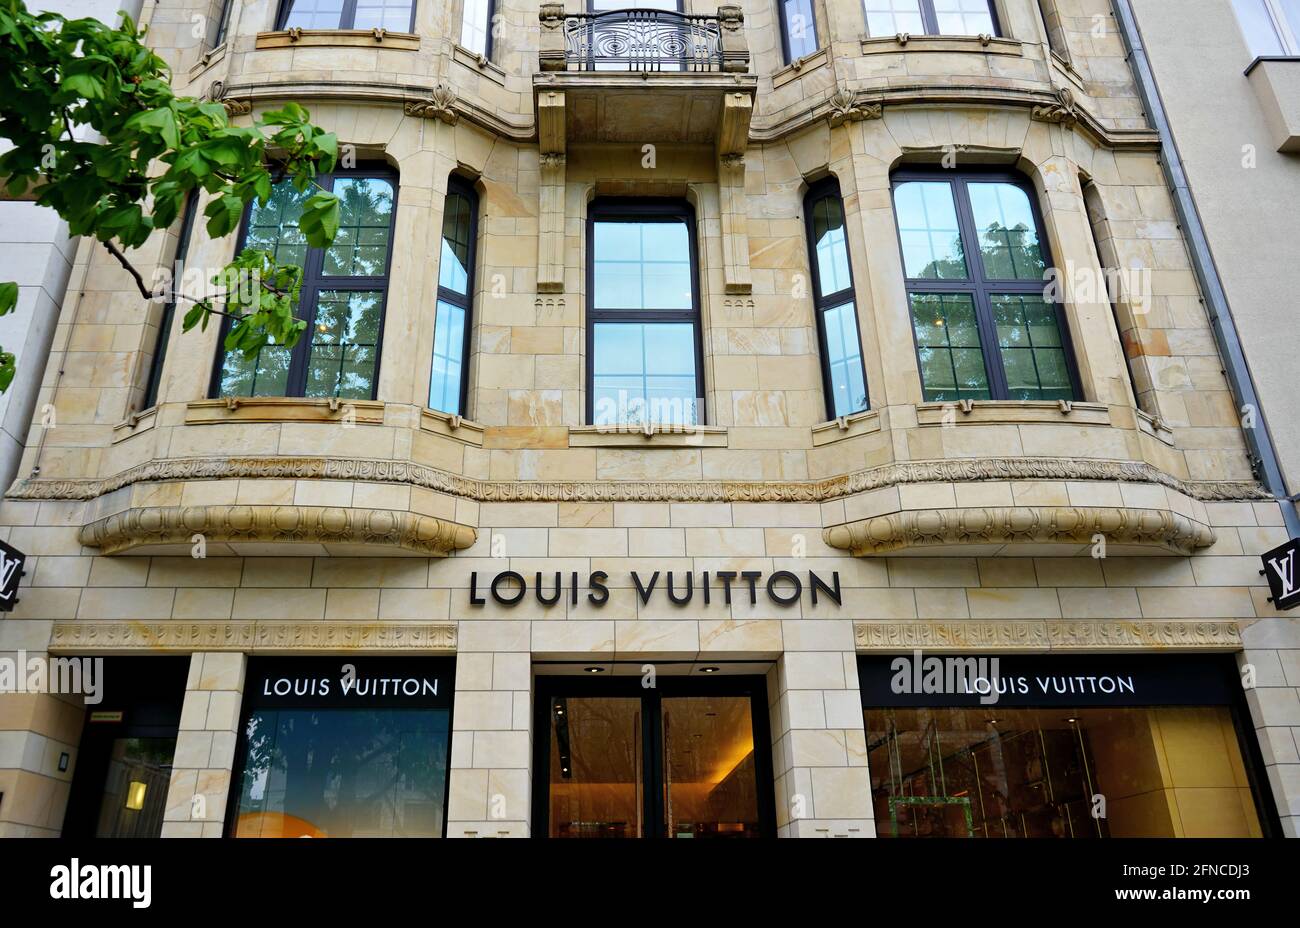 Louis Vuitton GUMP – Honolulu, HI